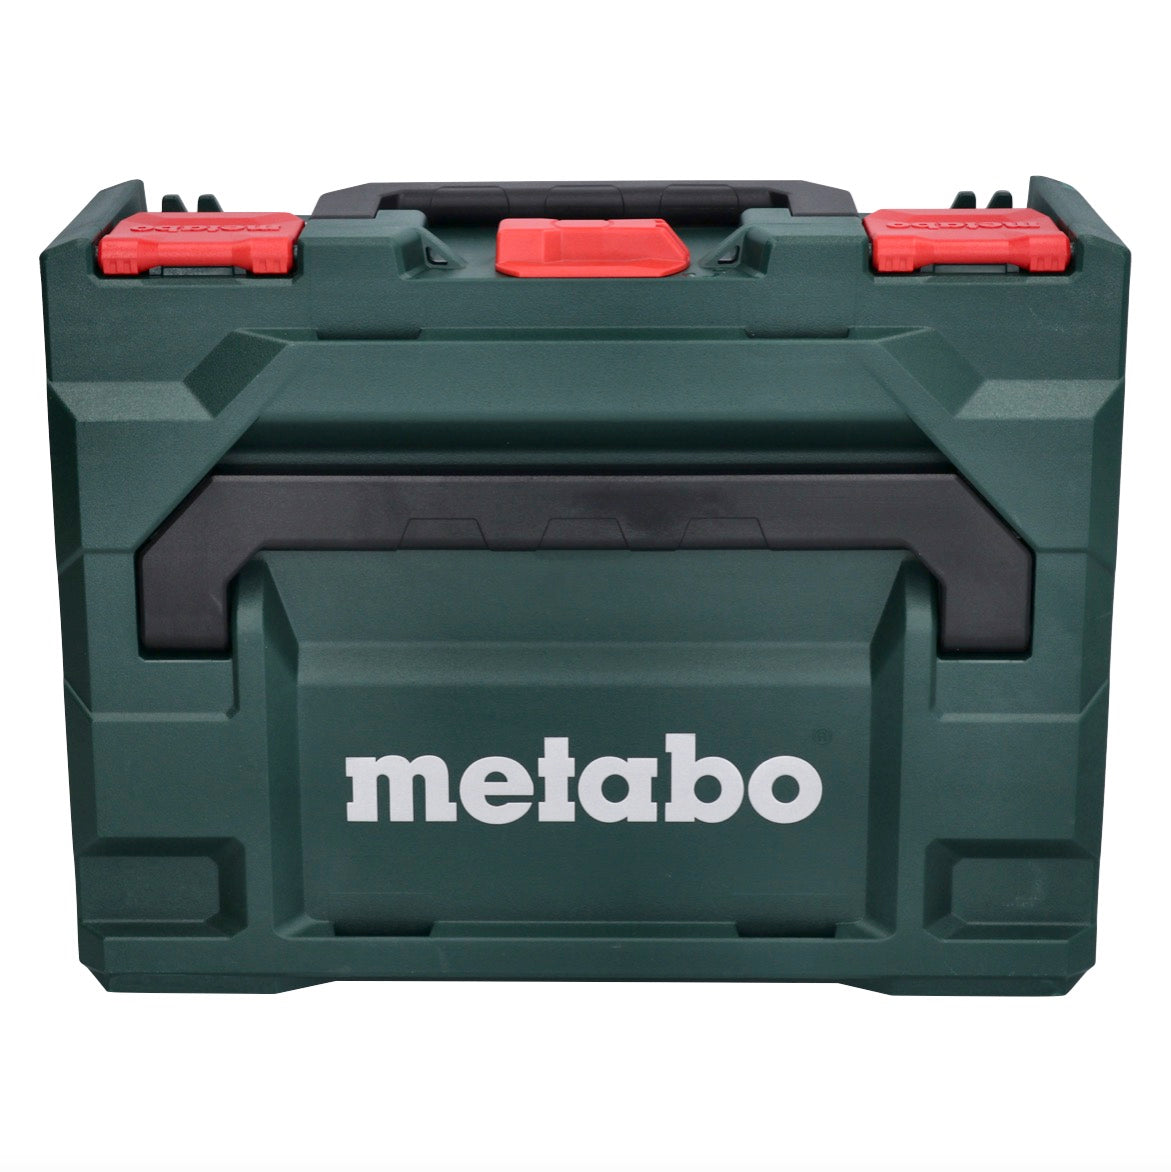 Metabo SSW 18 LT 300 BL Akku Schlagschrauber 18 V 300 Nm ( 602398840 ) Brushless + metaBOX - ohne Akku, ohne Ladegerät